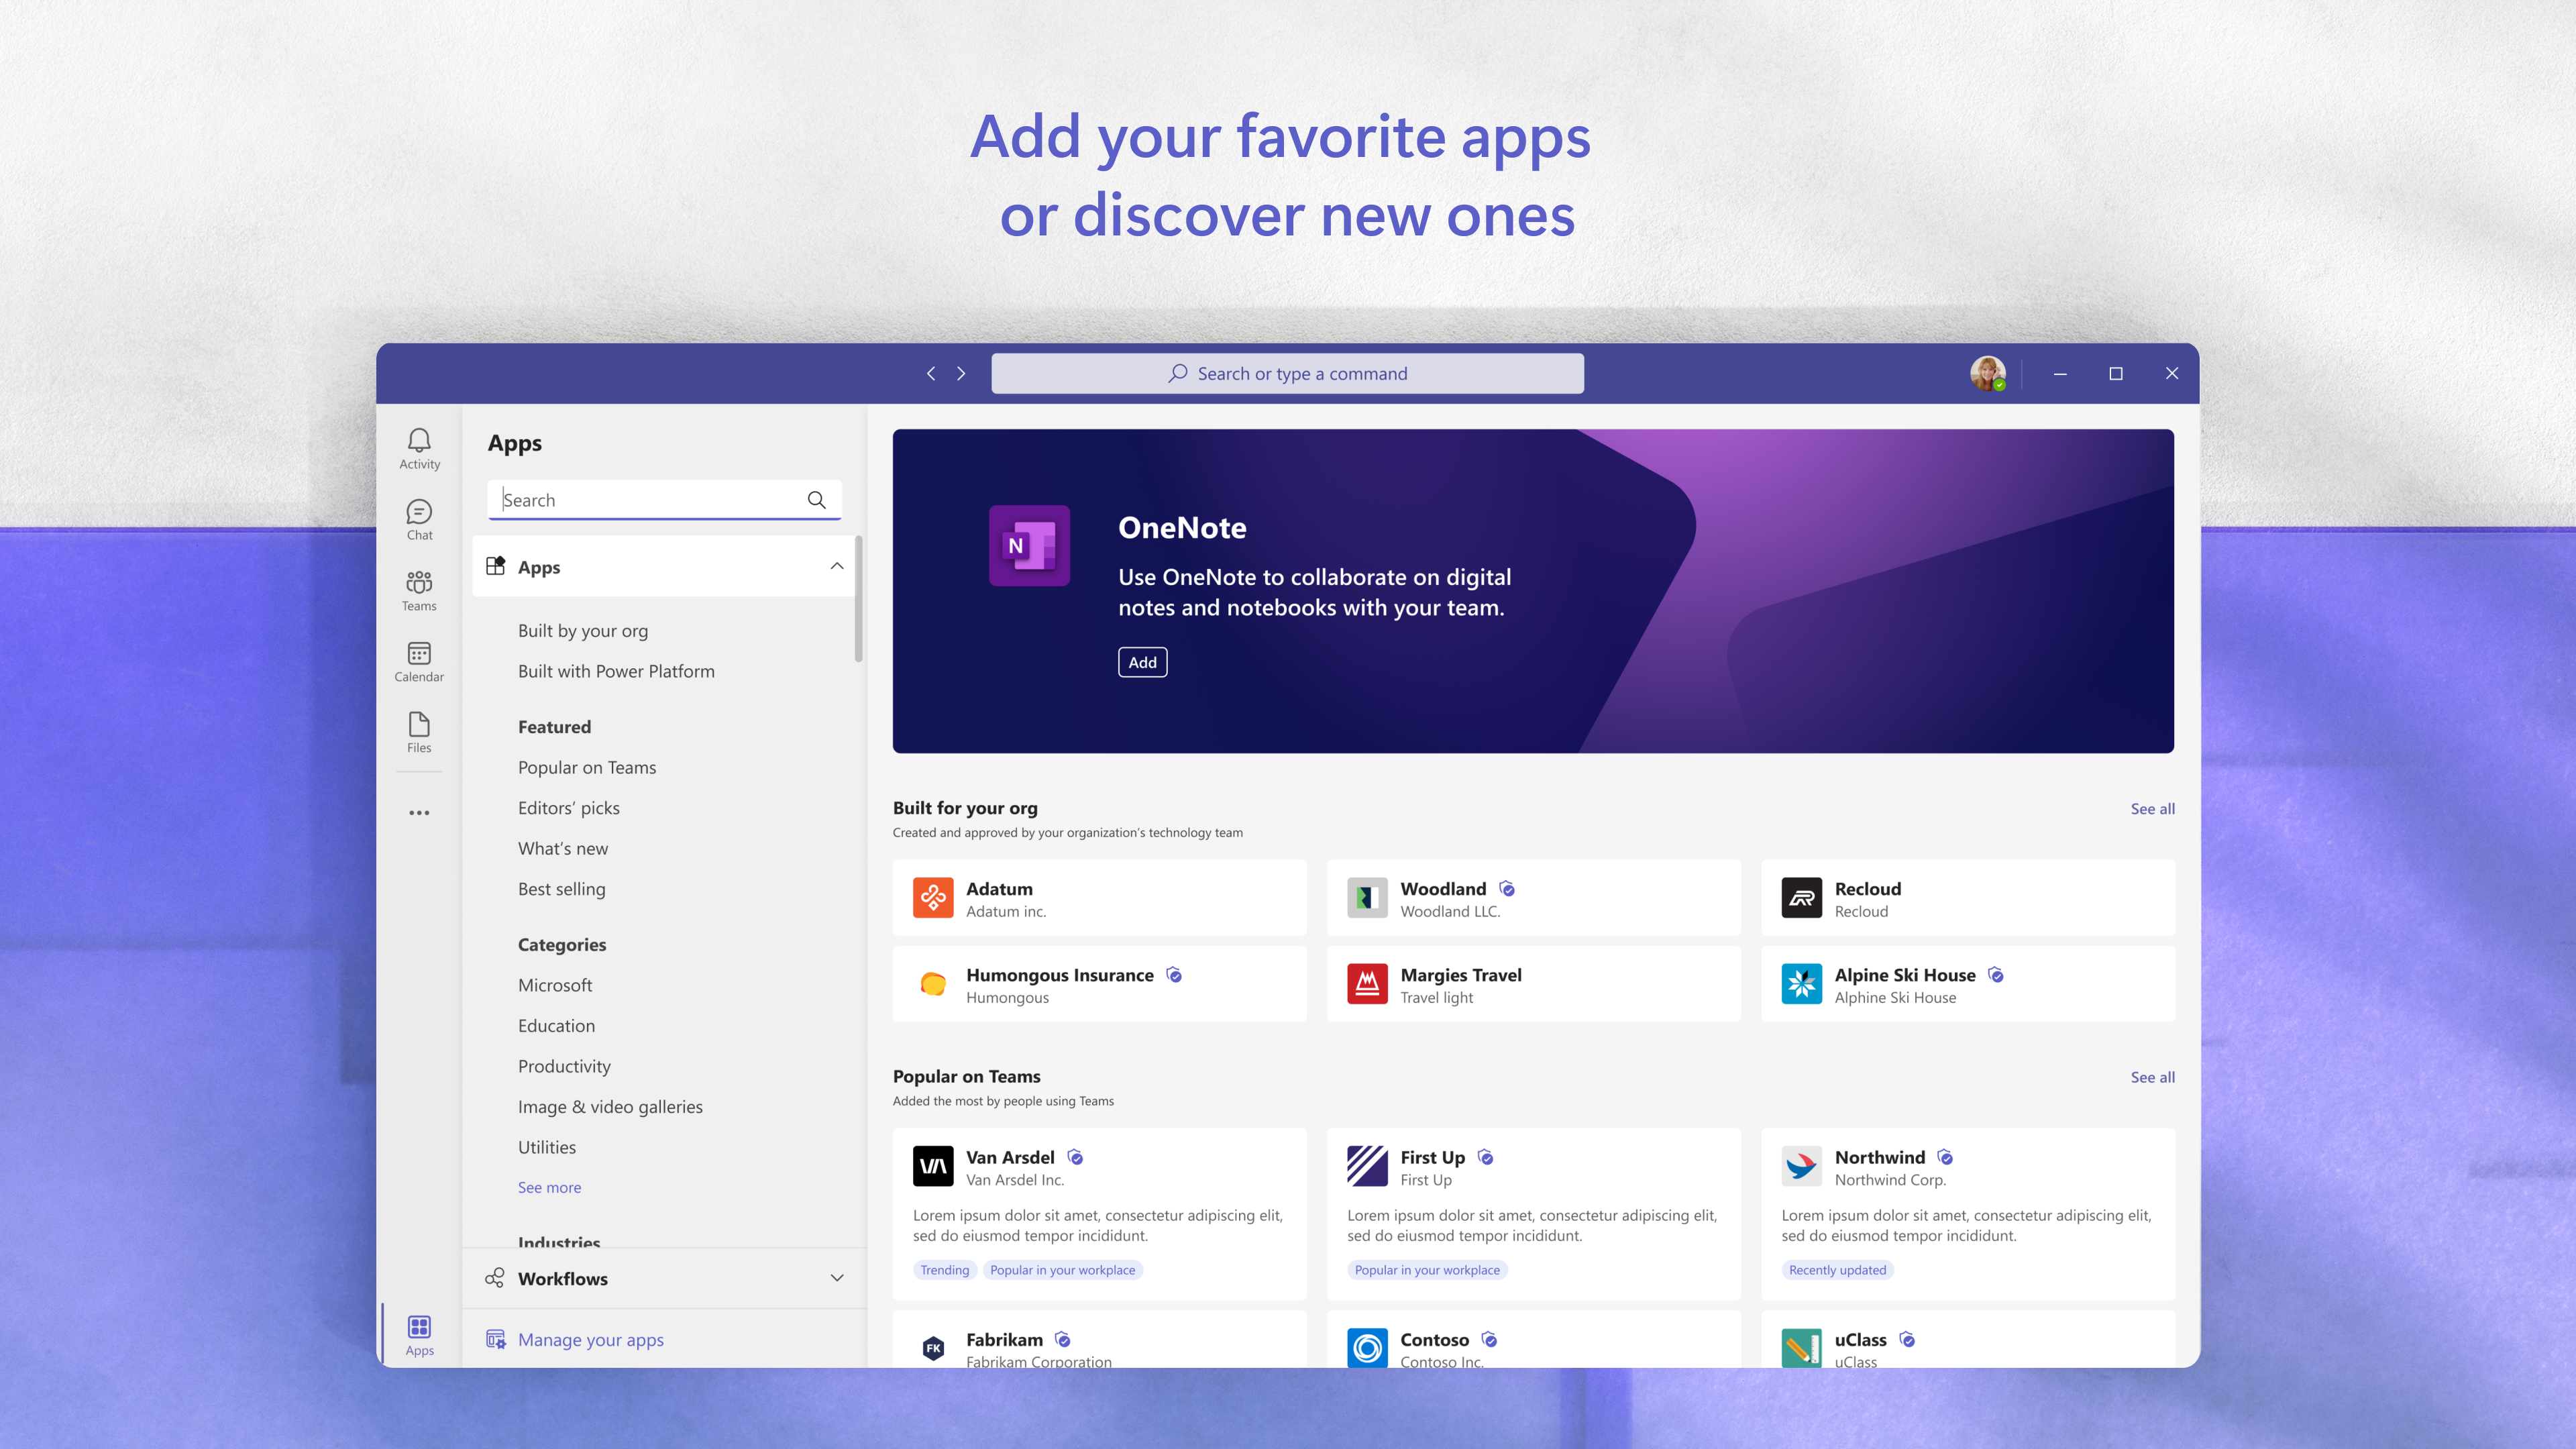 Download Microsoft Teams Desktop and Mobile Apps